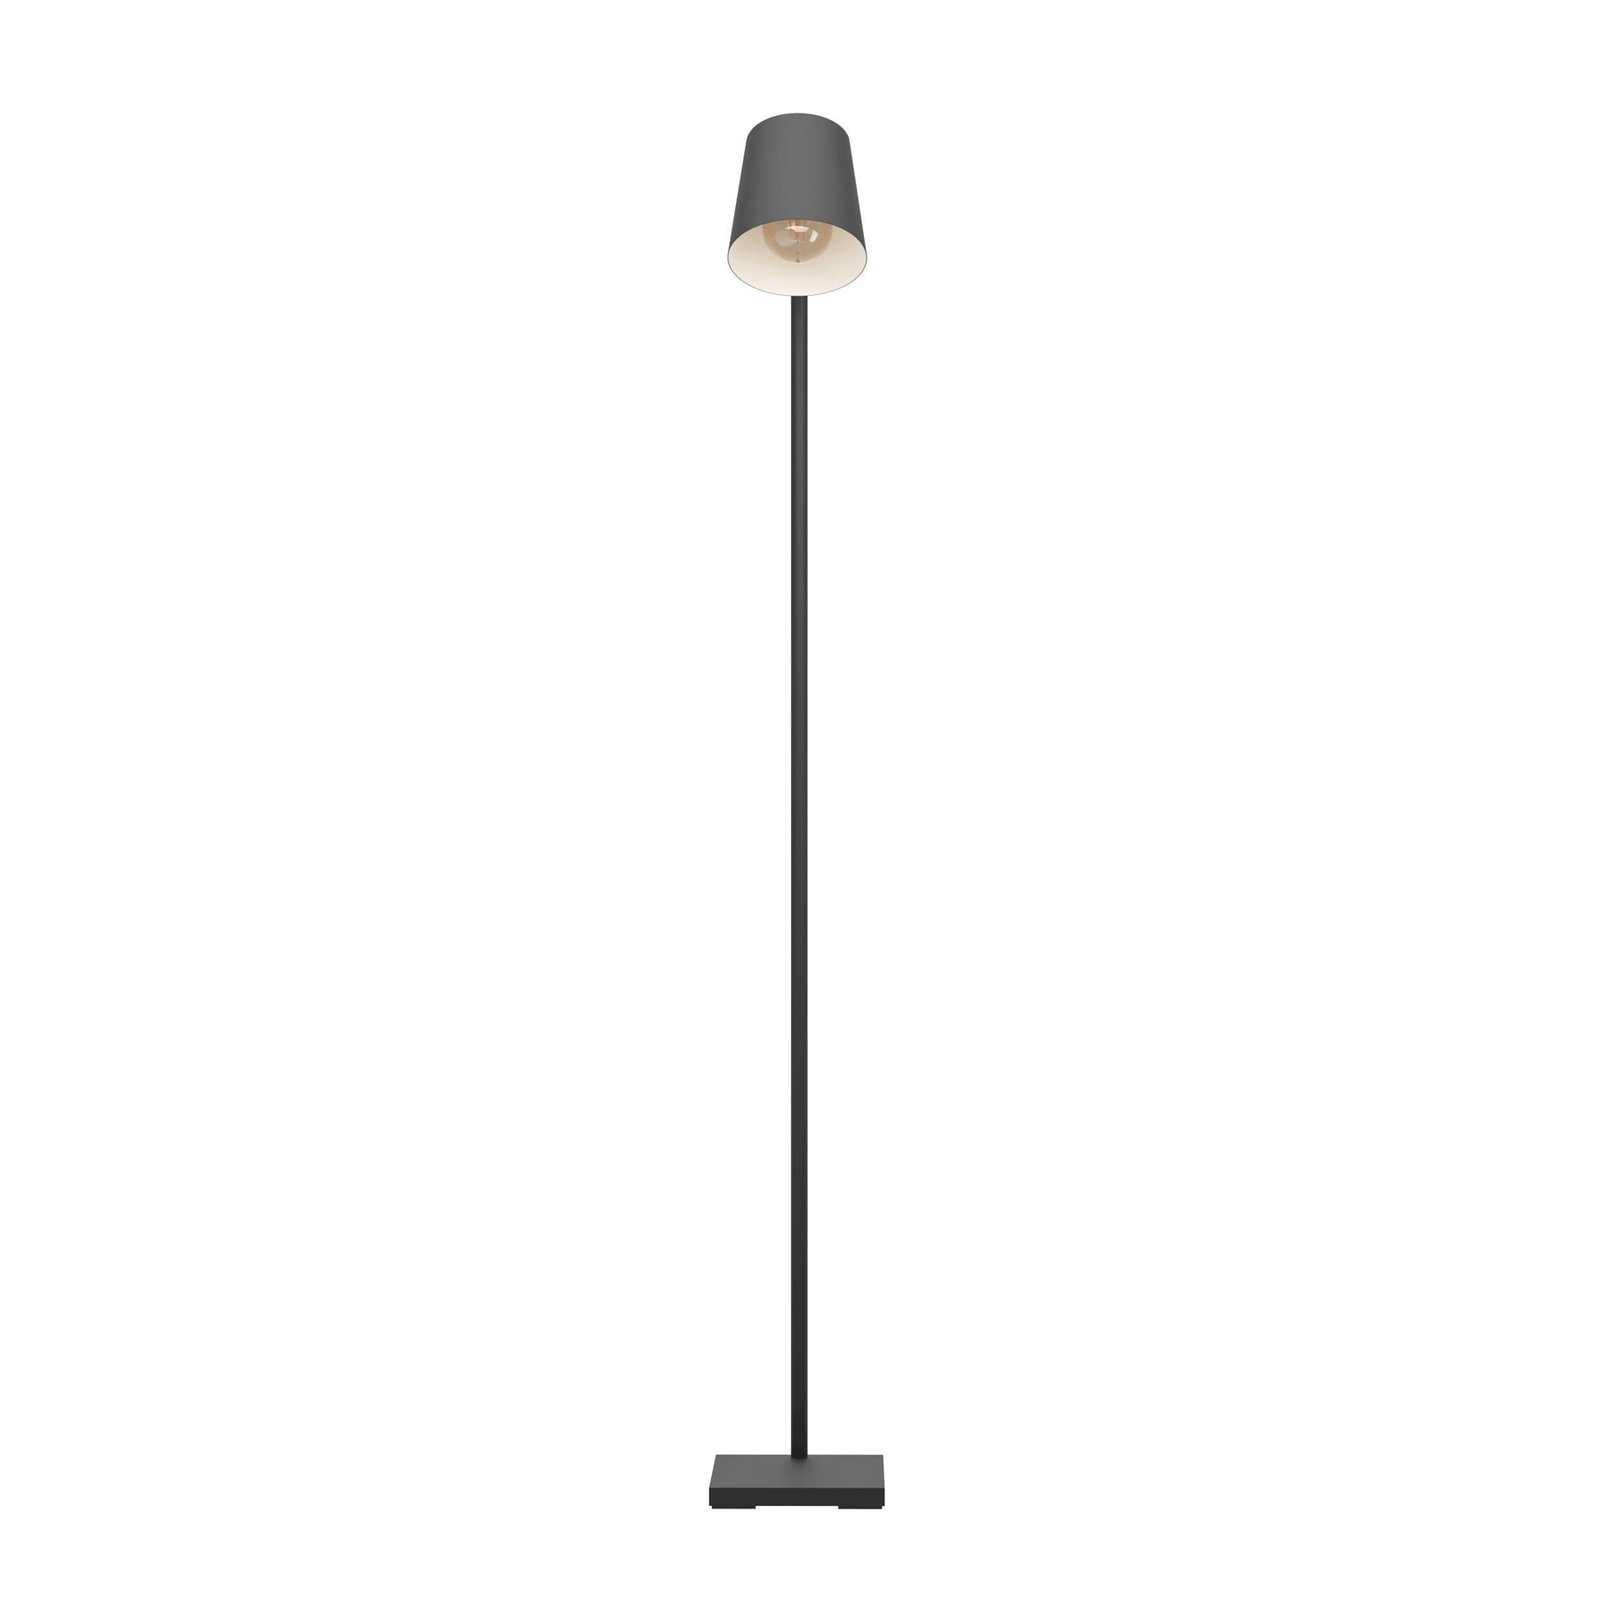 Lacey gulvlampe, højde 159,5 cm, sort, stål